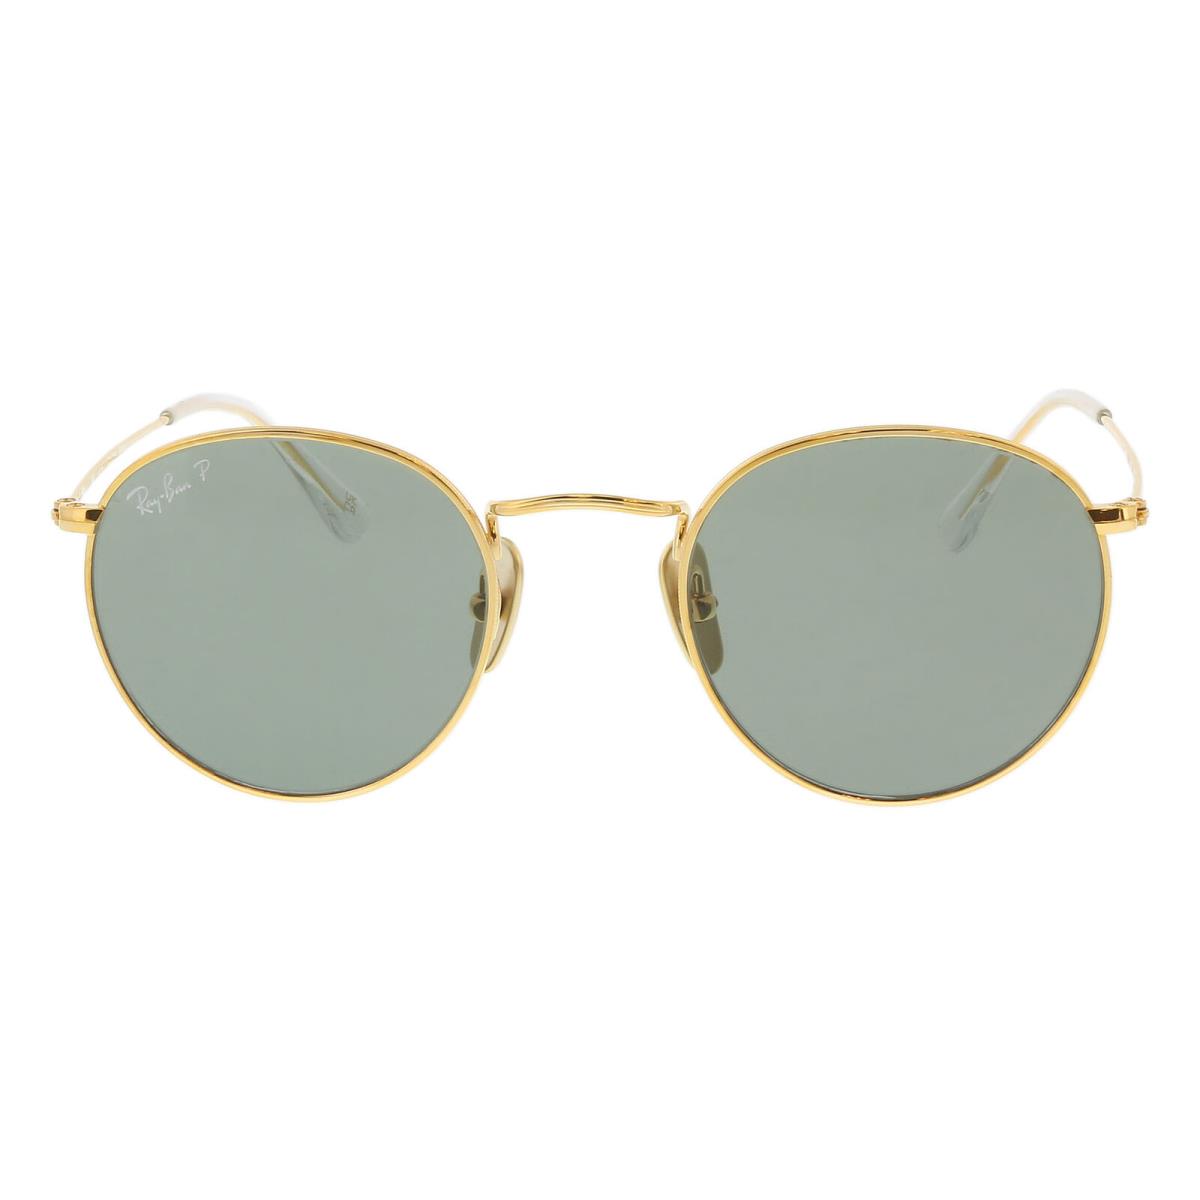 Ray-ban 0RB8247 Titanium Polarized Sunglasses - Gold, Frame: Gold, Lens: Green